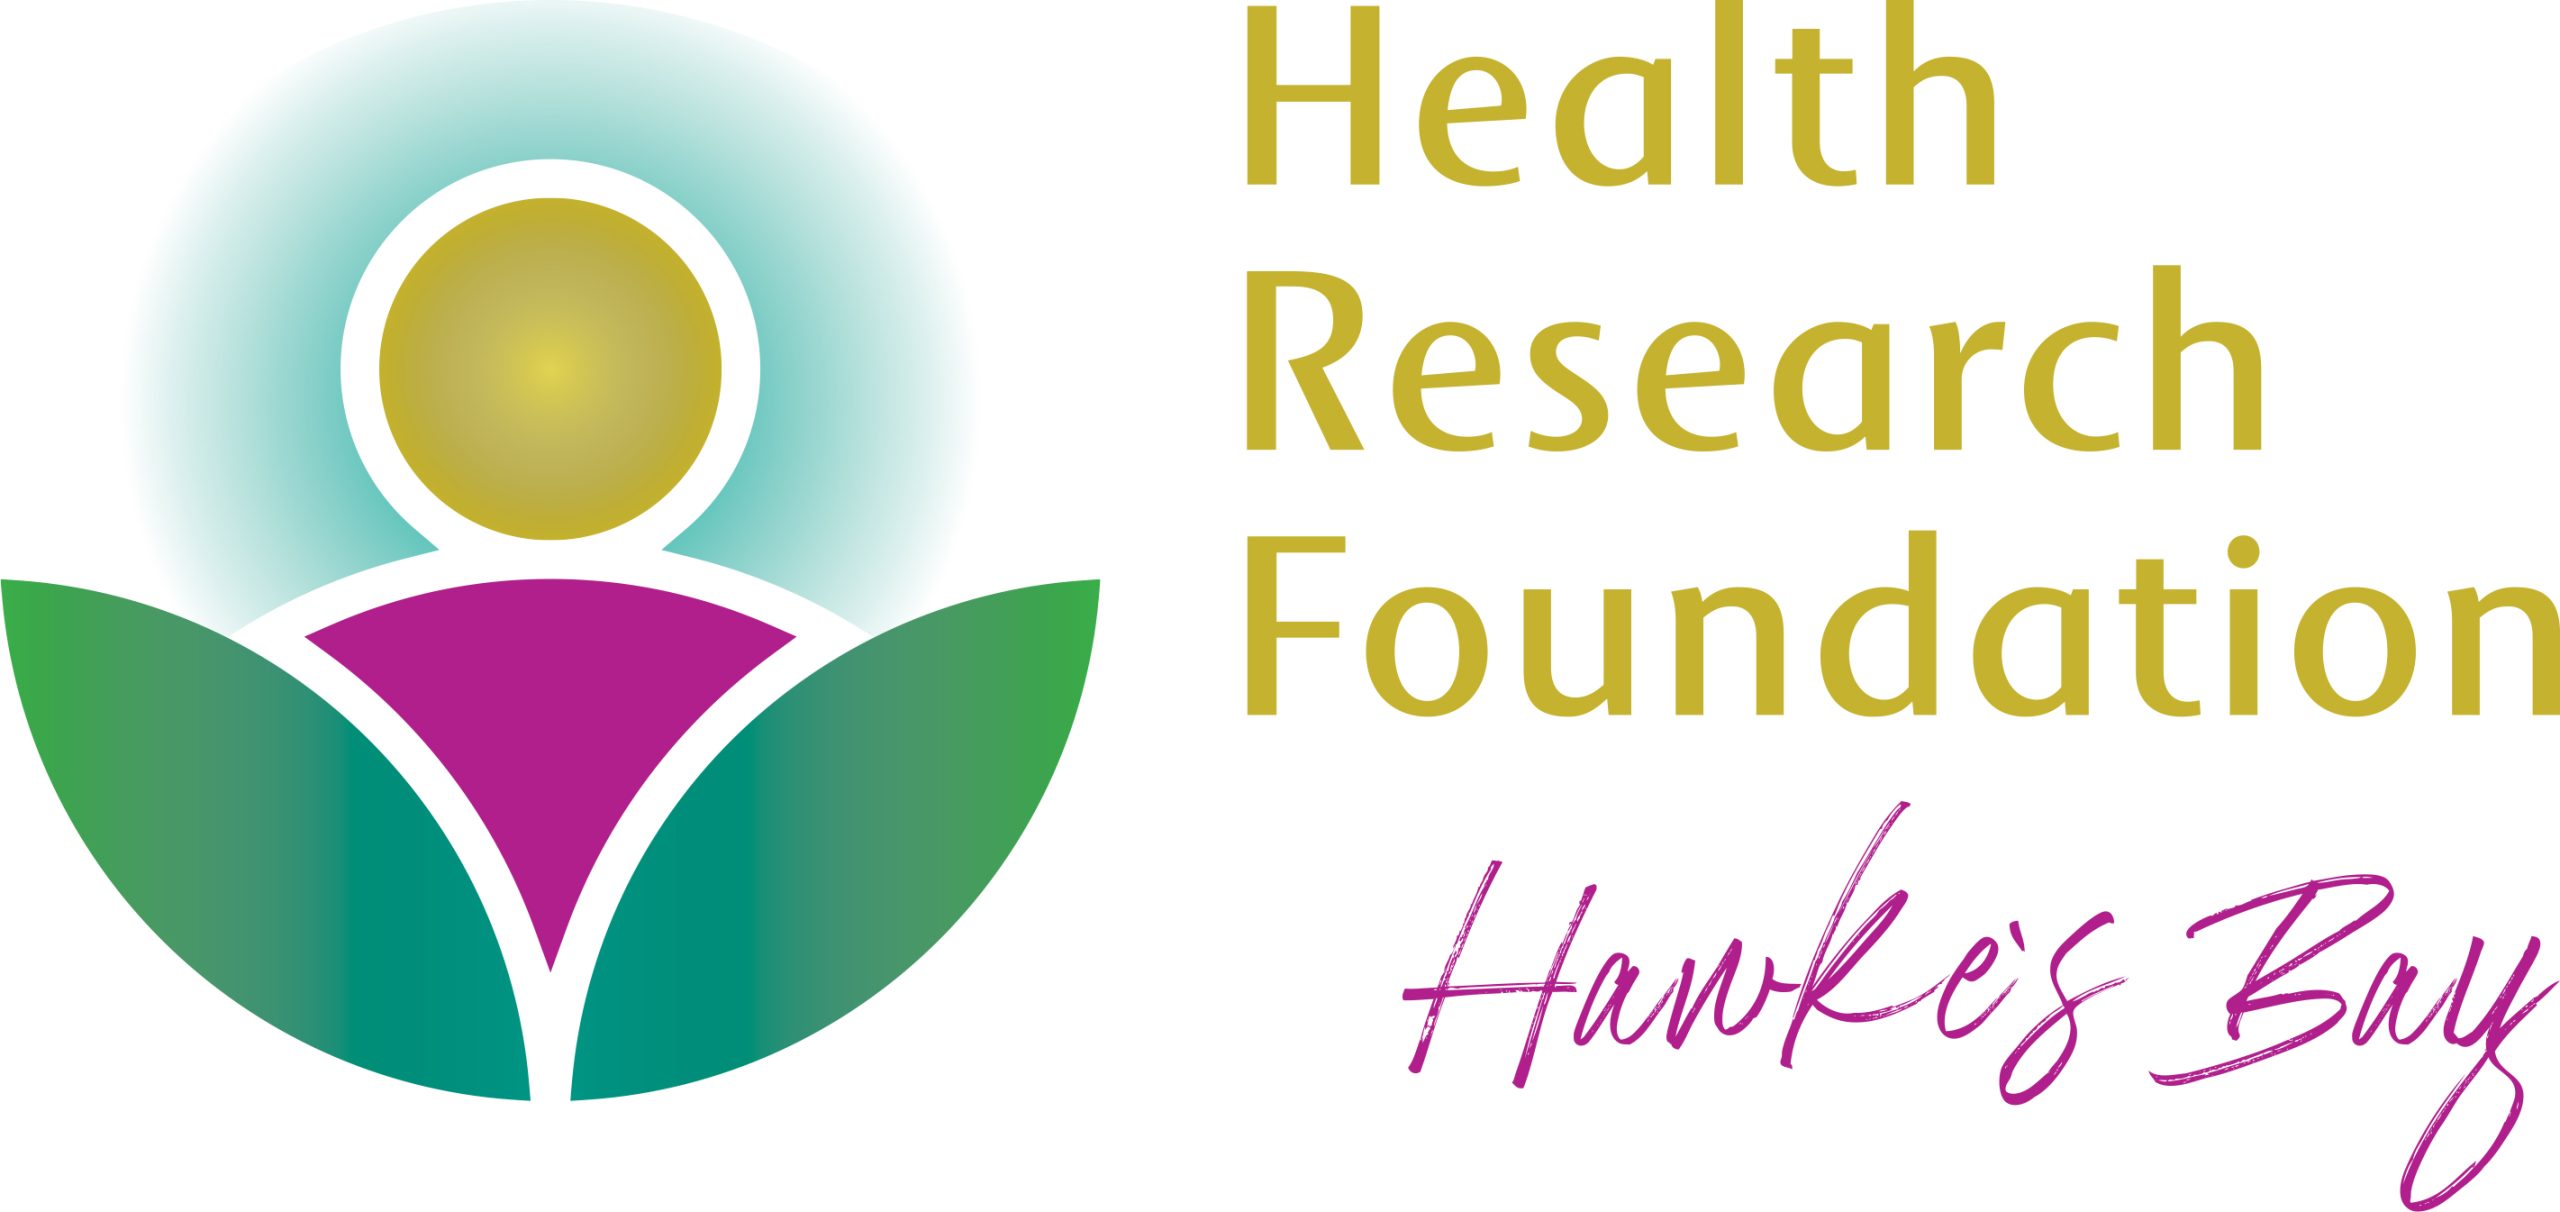 Health Research Foundation - Hawke's Bay